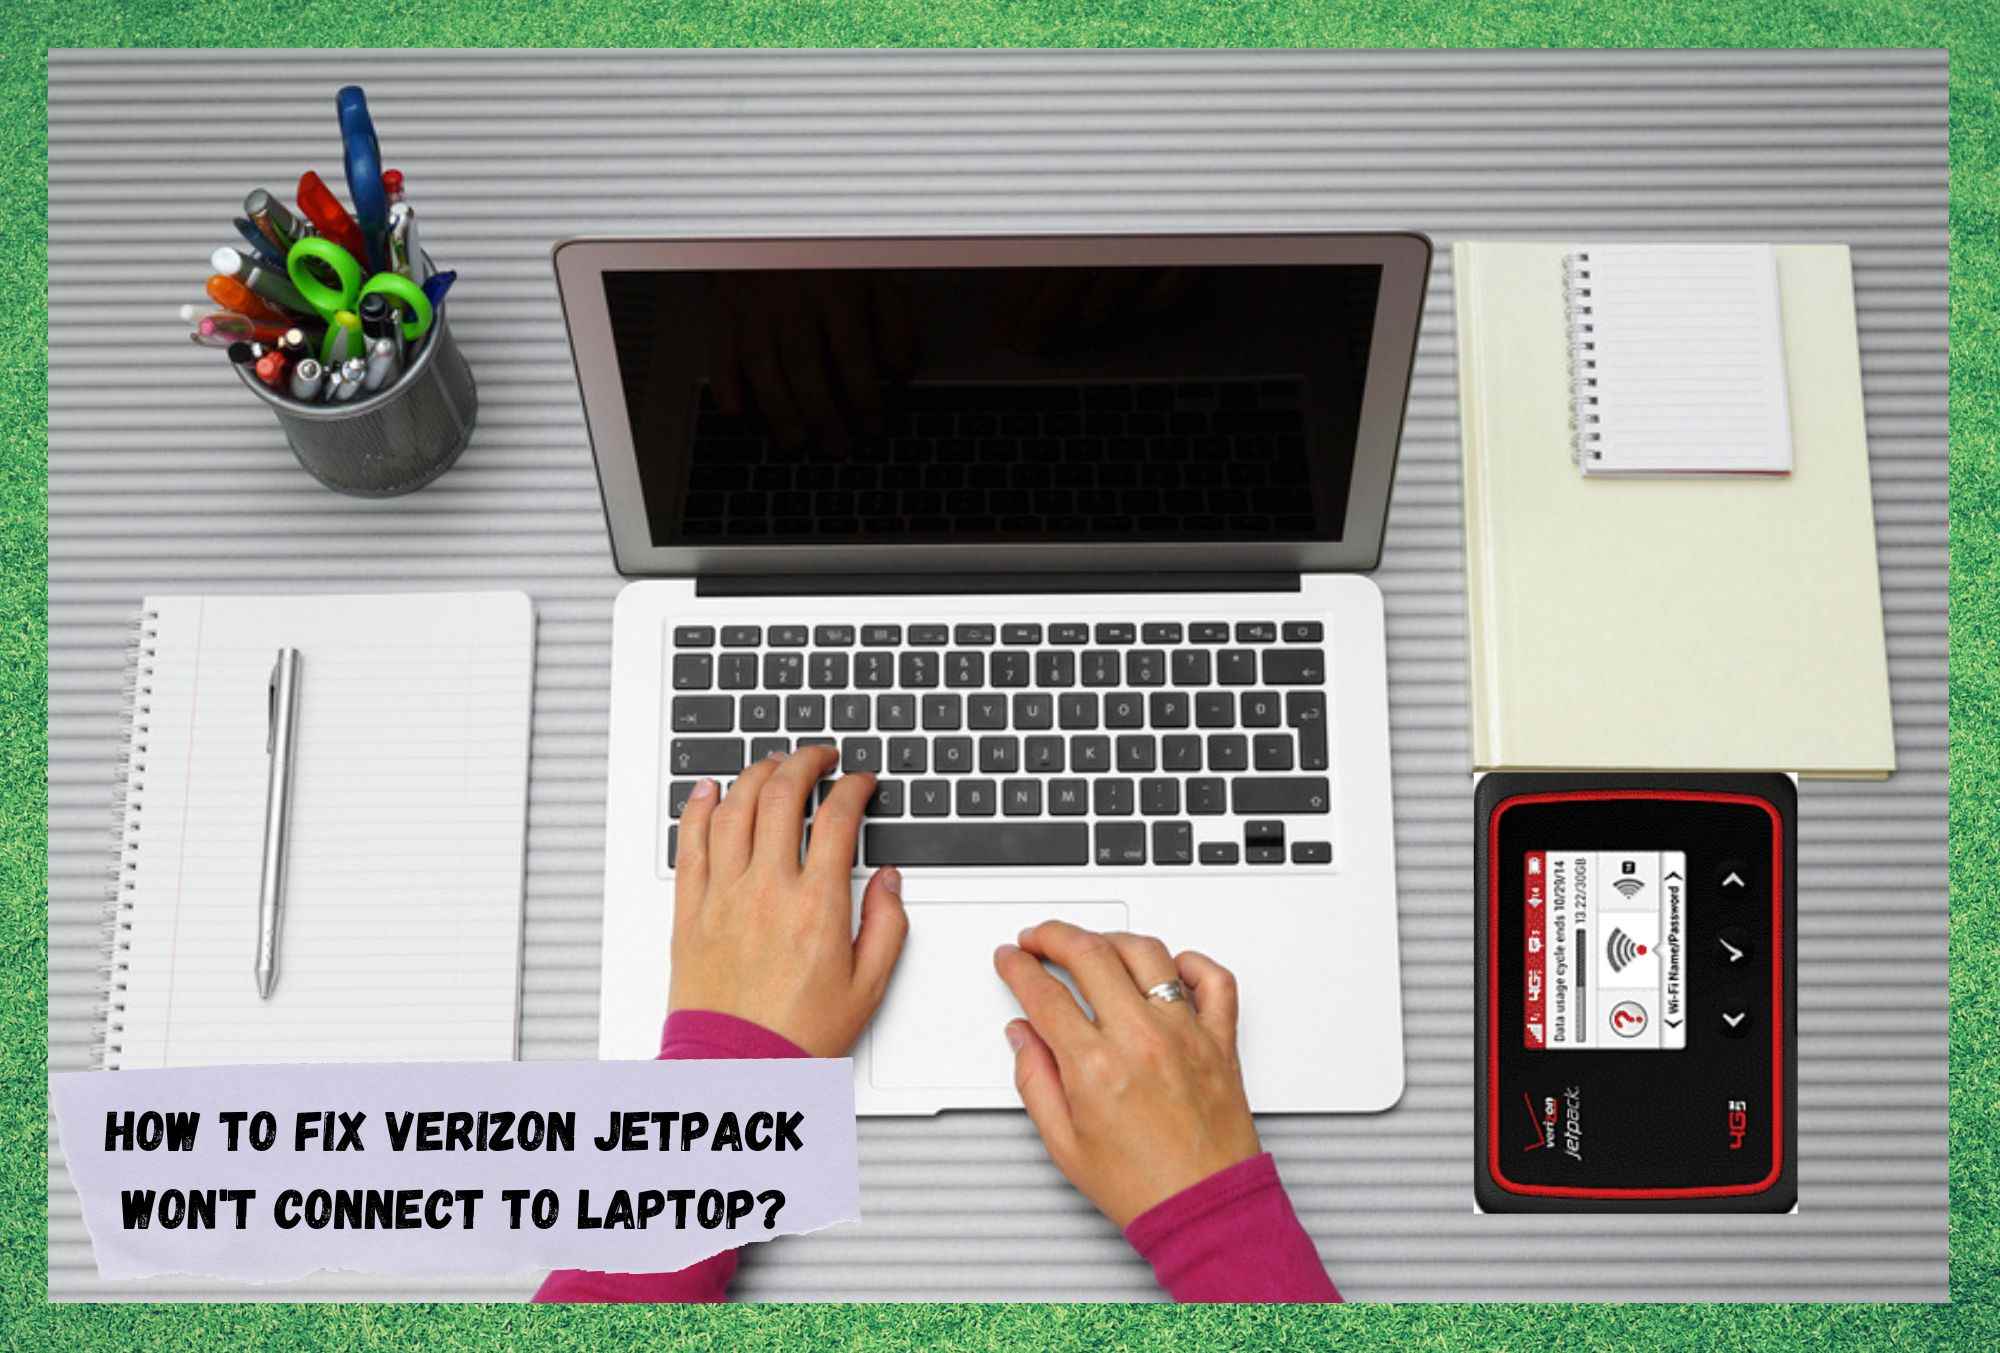 verizon jetpack won't connect to laptop